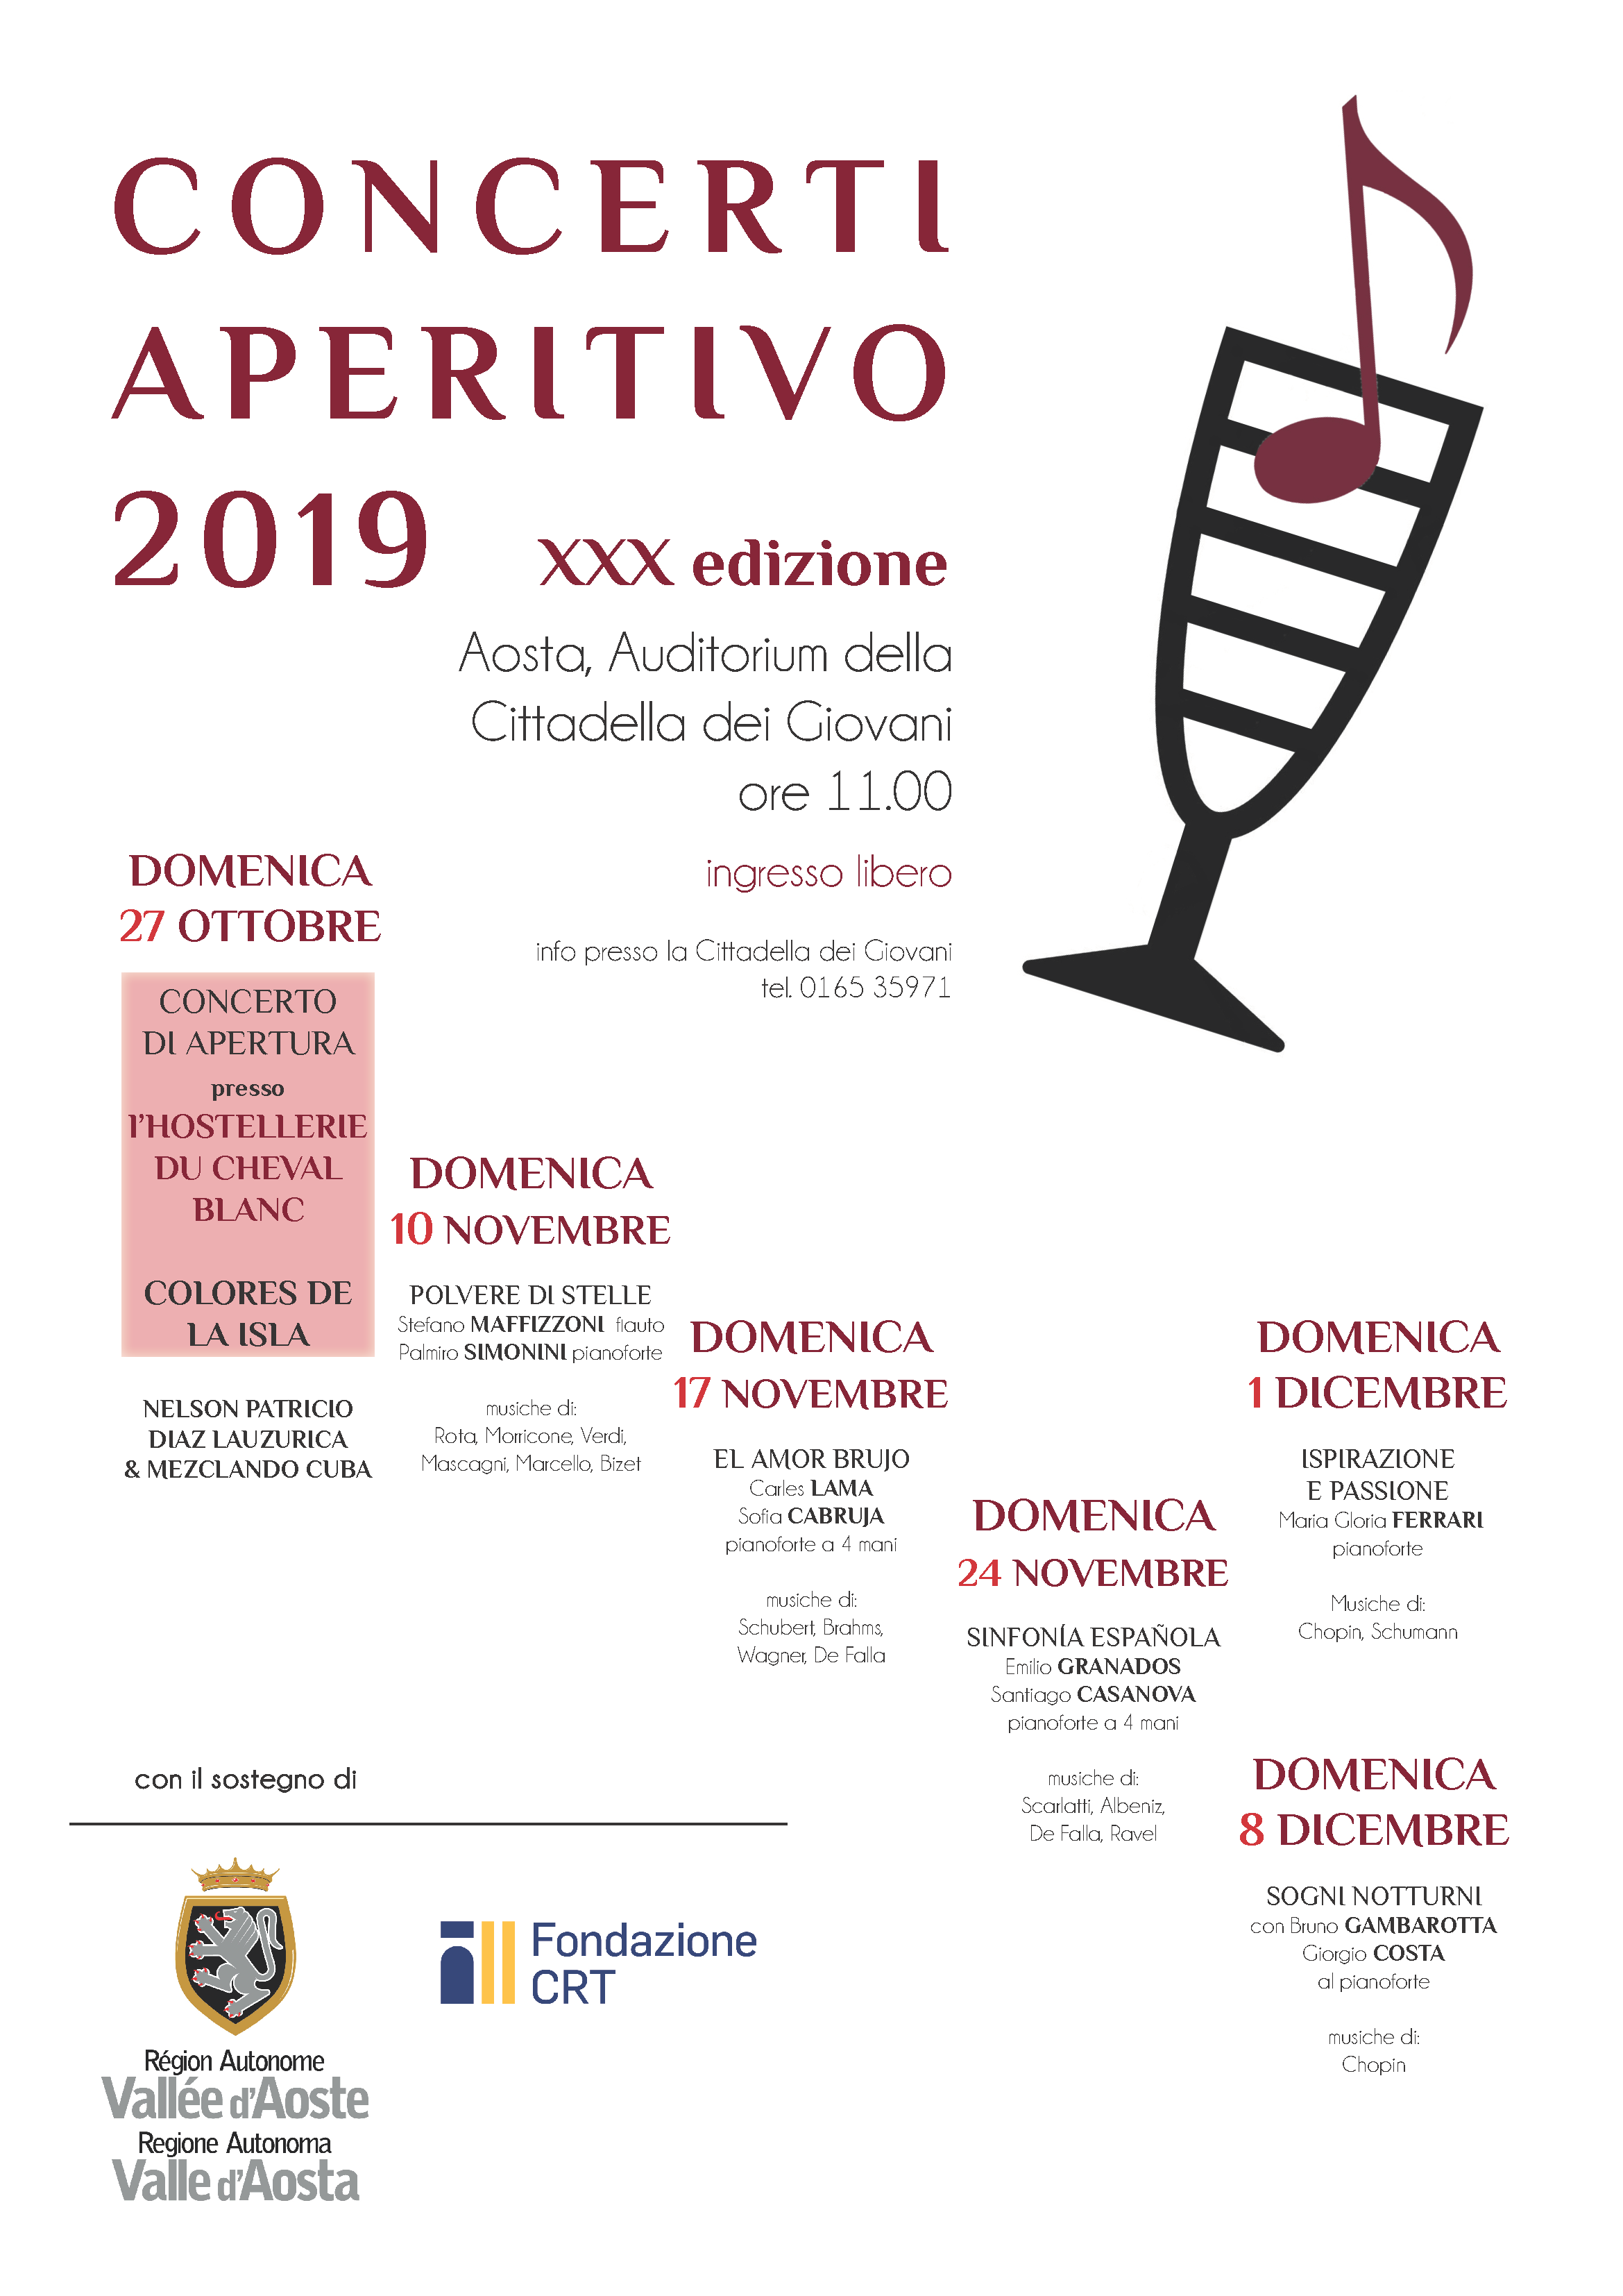 Concerto aperitivo Aosta 2019